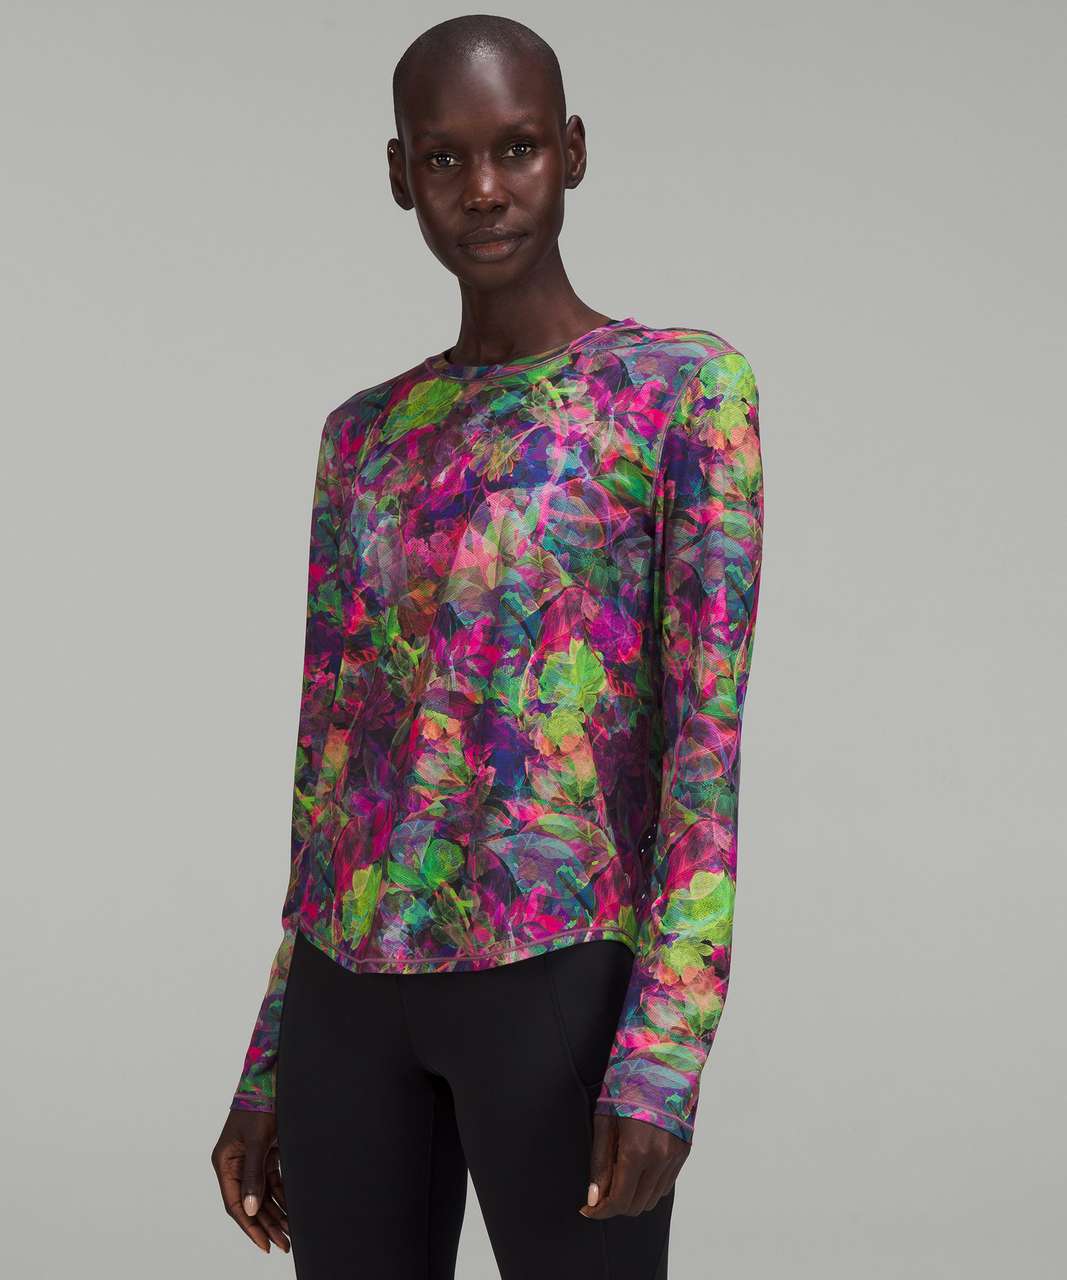 Lululemon High-Neck Running and Training Long Sleeve Shirt - Vivid Floral Tone Multi